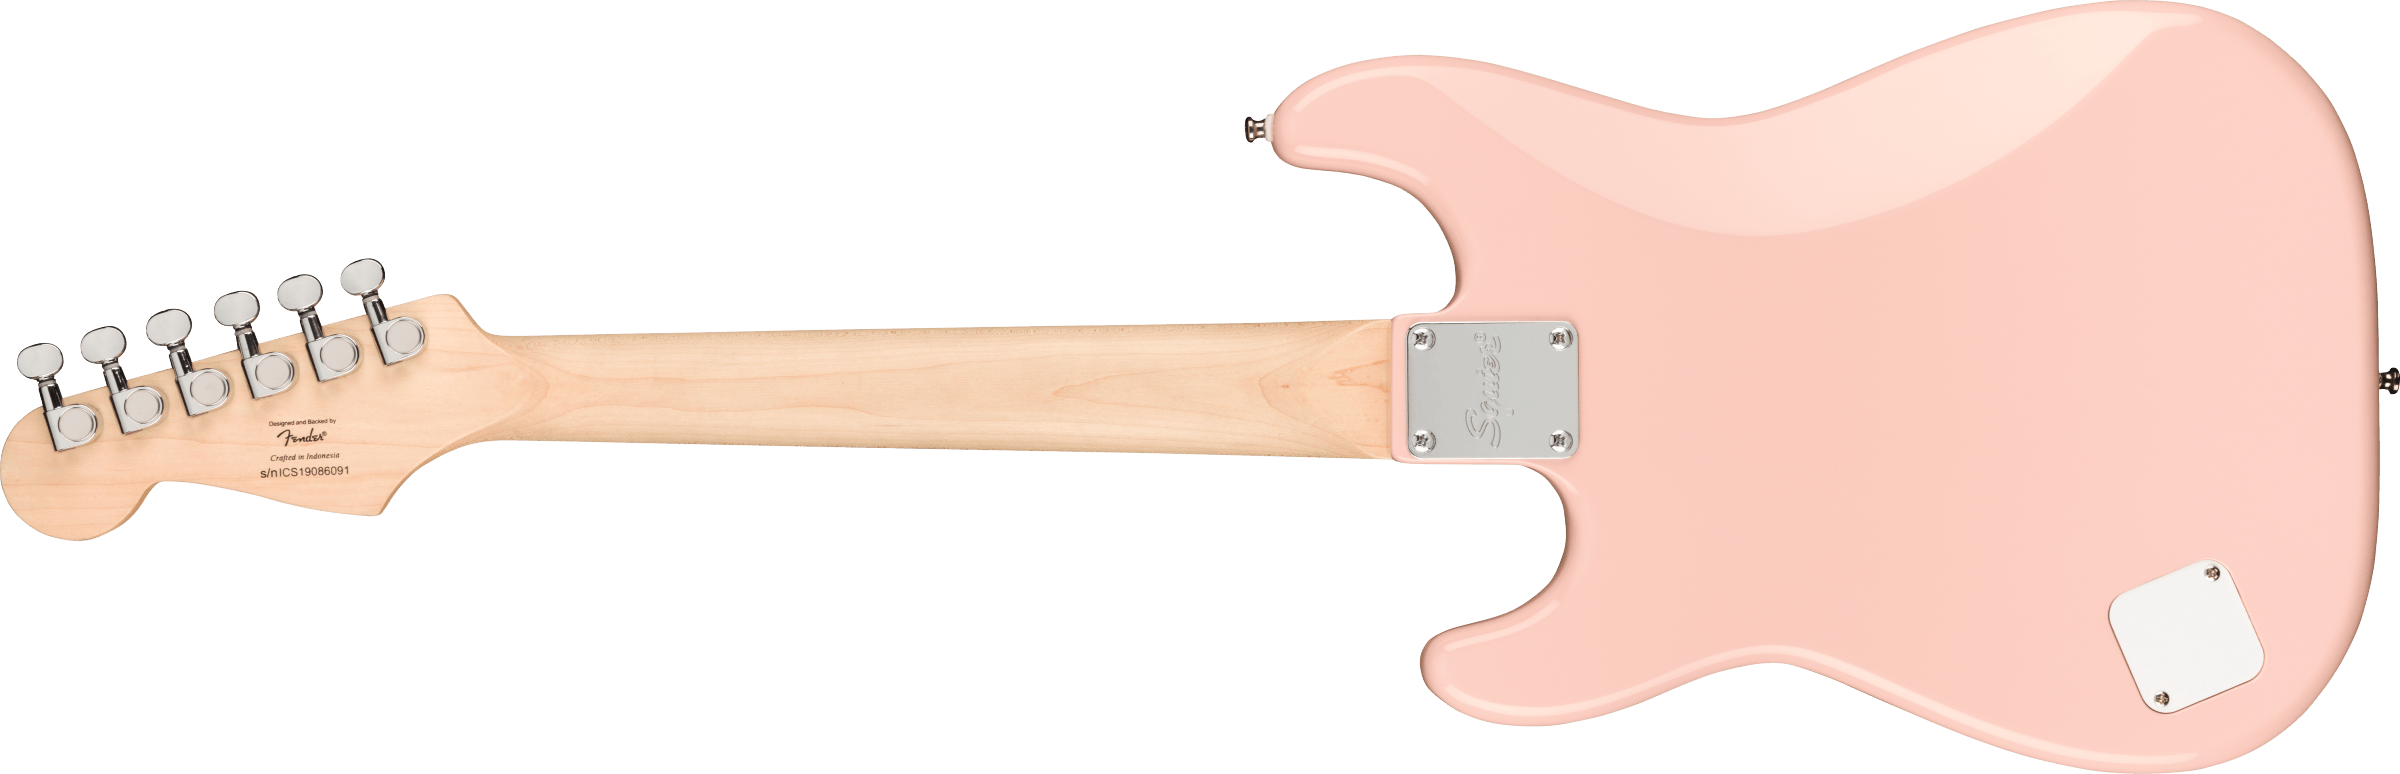 Squier Squier Mini Strat V2 Ht Sss Lau - Shell Pink - E-Gitarre für Kinder - Variation 1